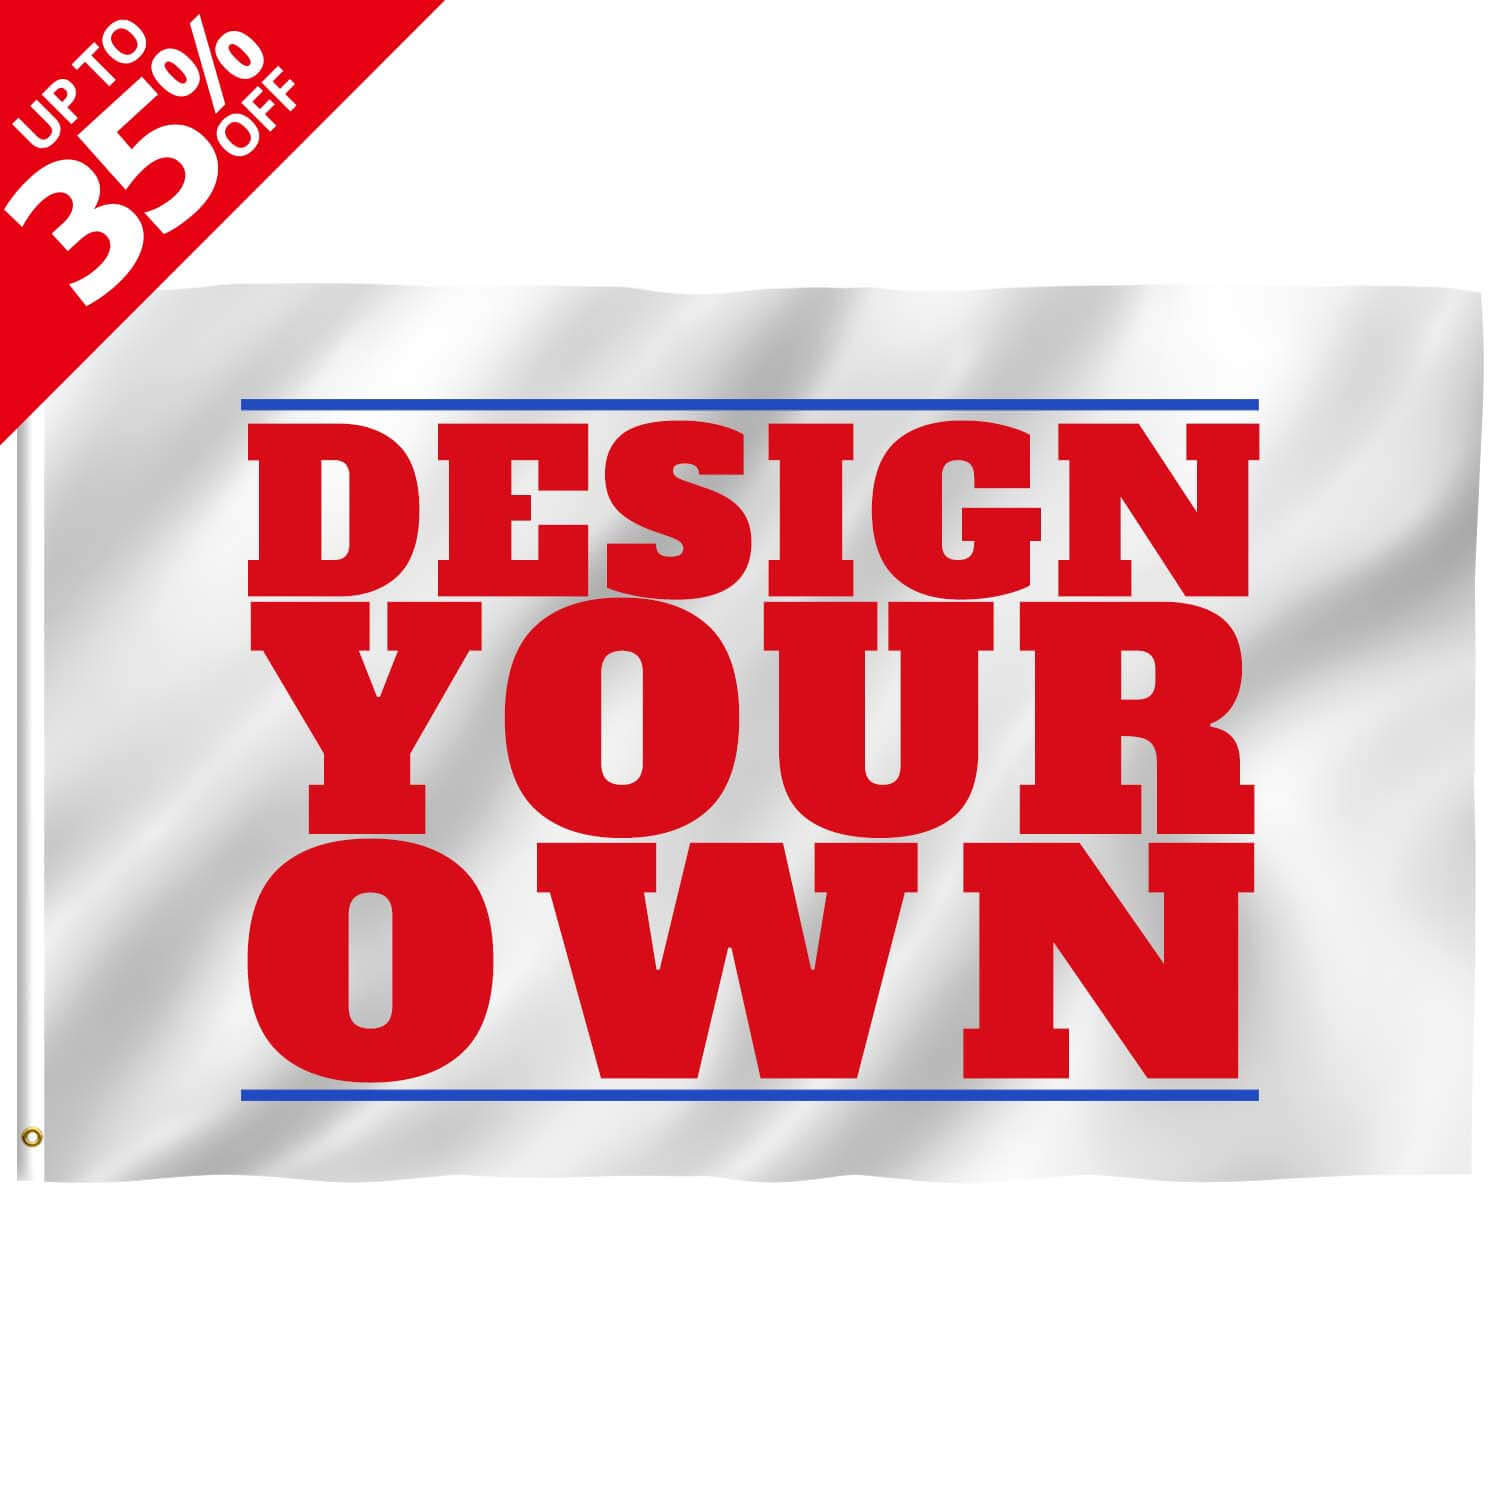 CUSTOM DESIGN LOGO / TEXT ON WHITE FLAG 3 x 2 FT - PRINTED PERSONALISED ...